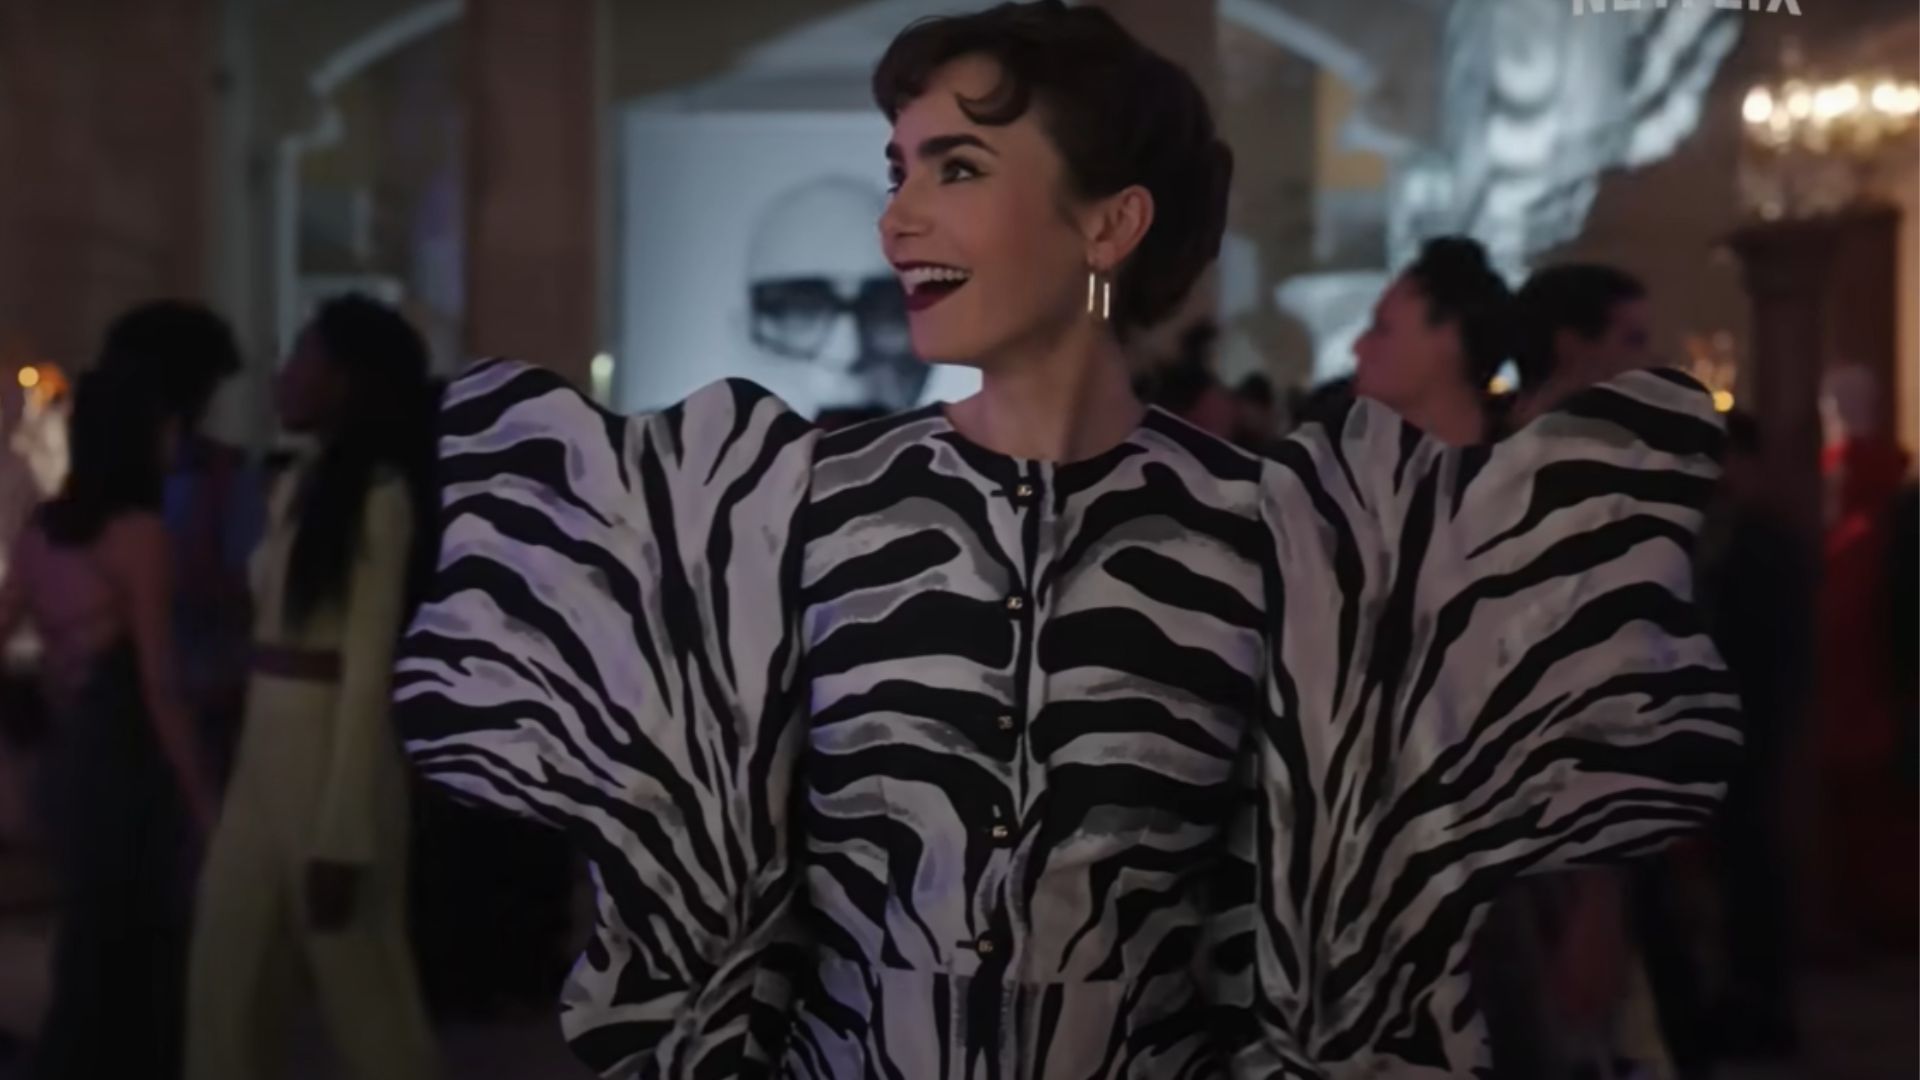 Emily in Paris outfit - zebra print